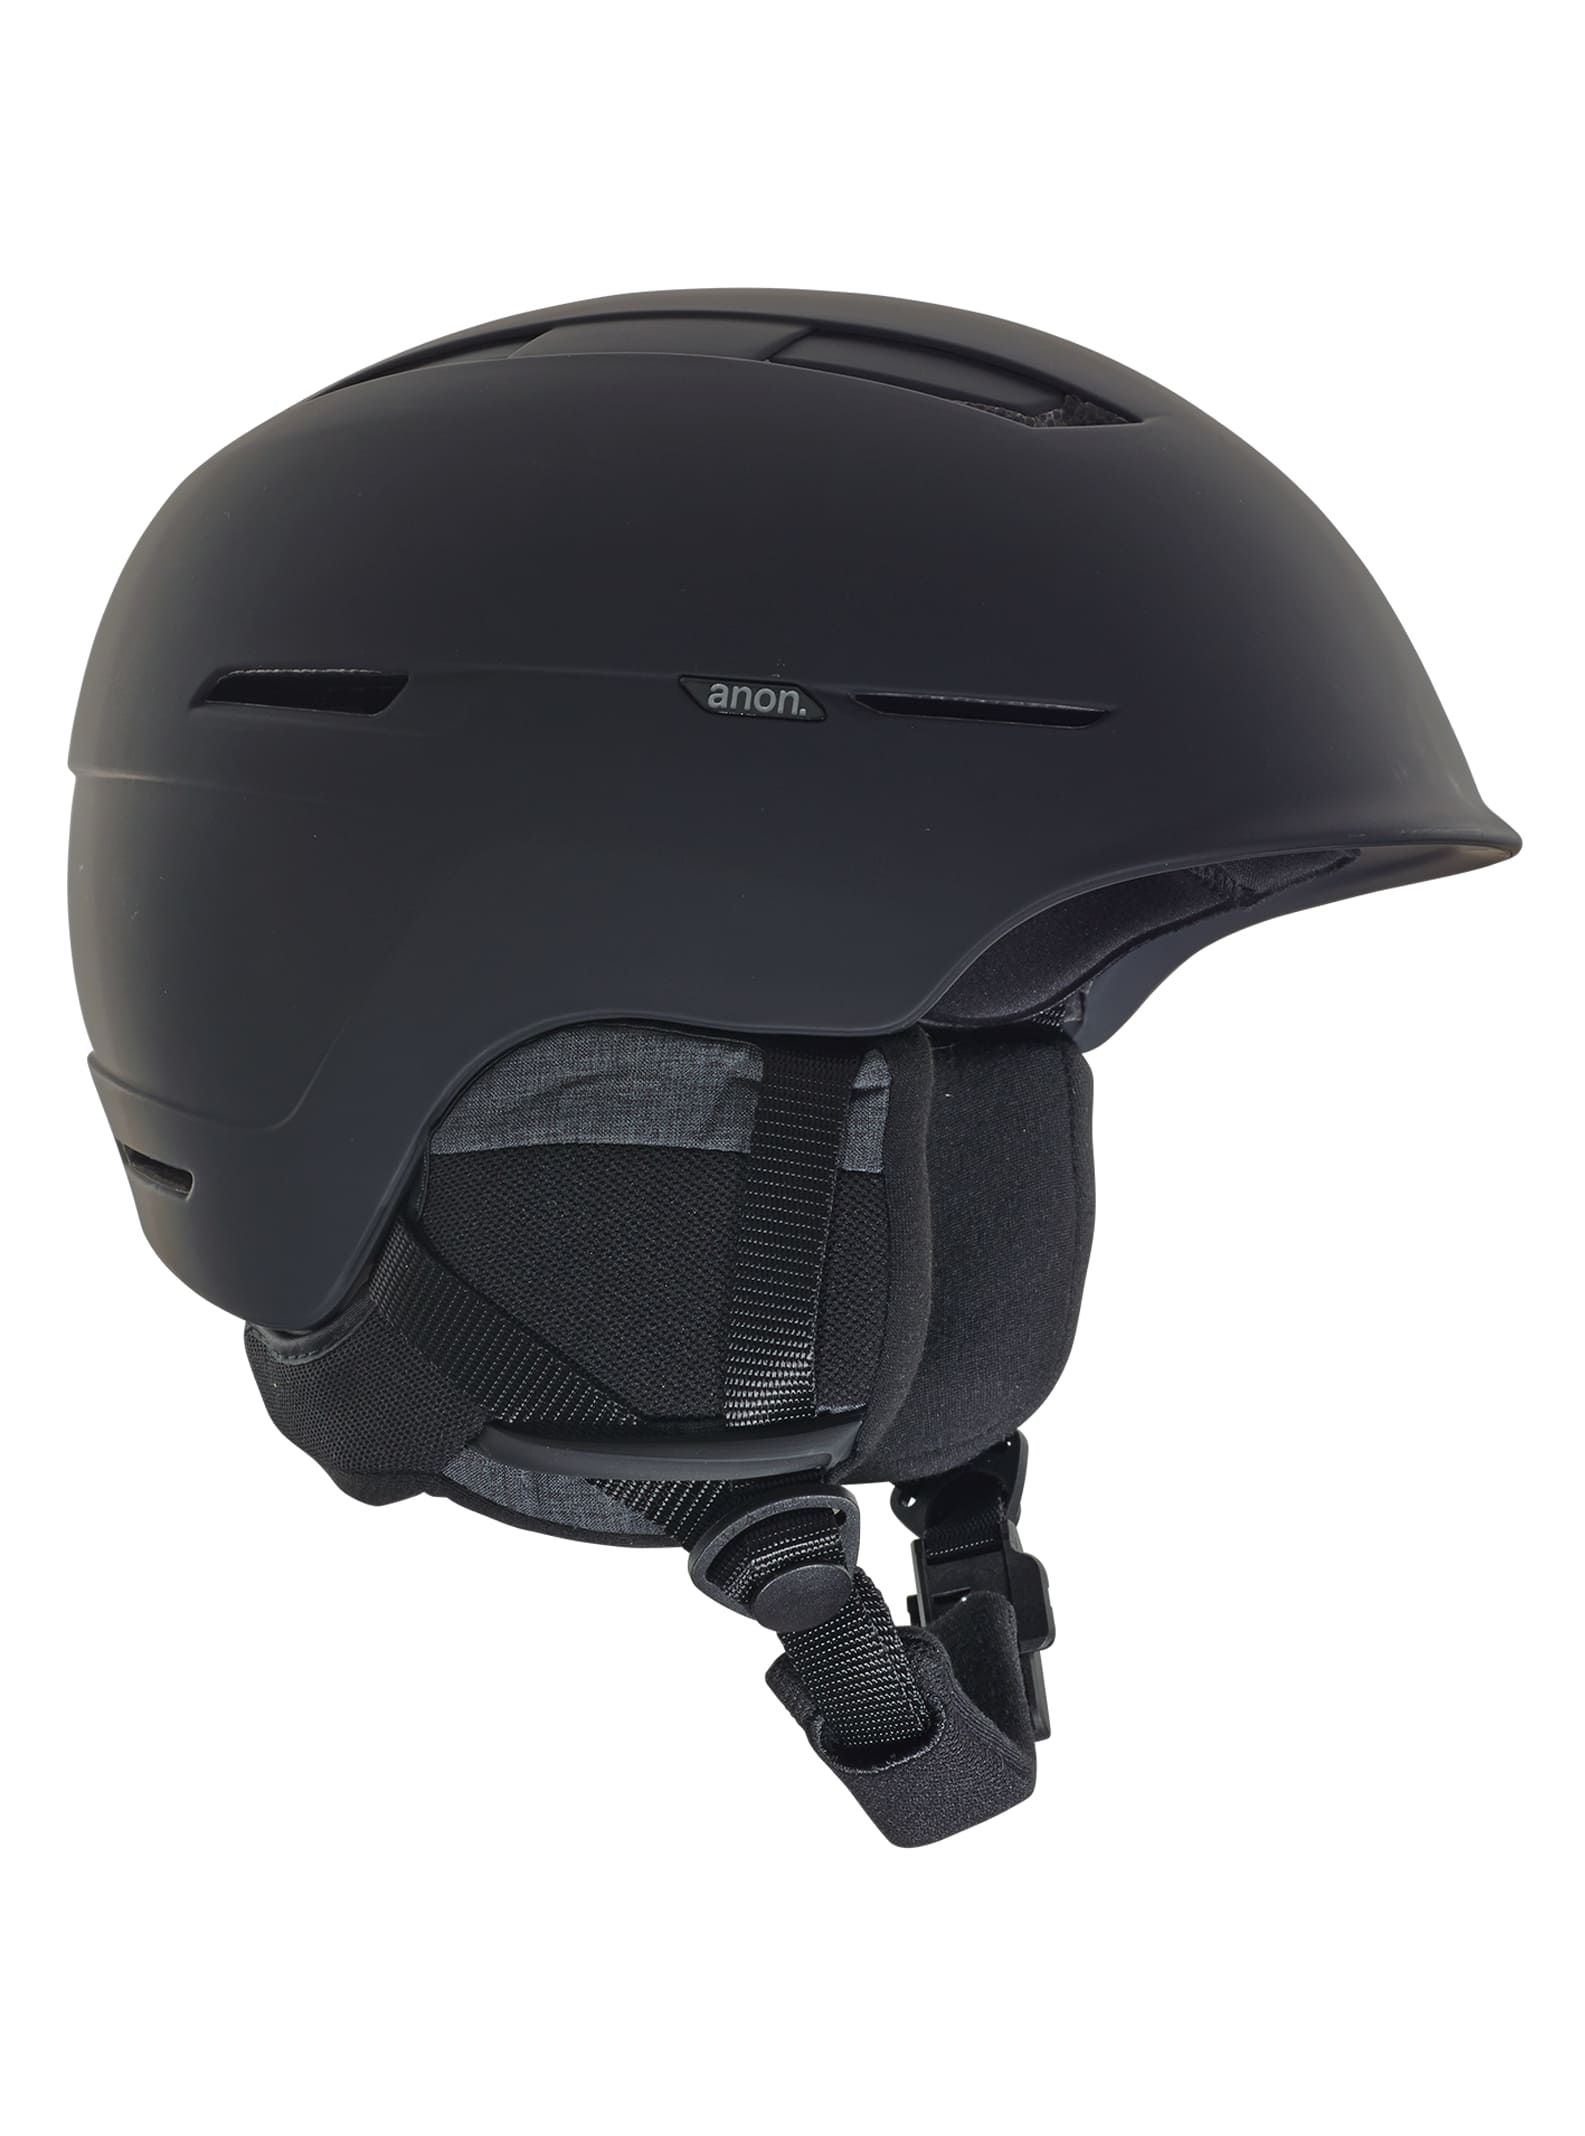 Anon Invert Helmet | Burton.com Winter 2022 US